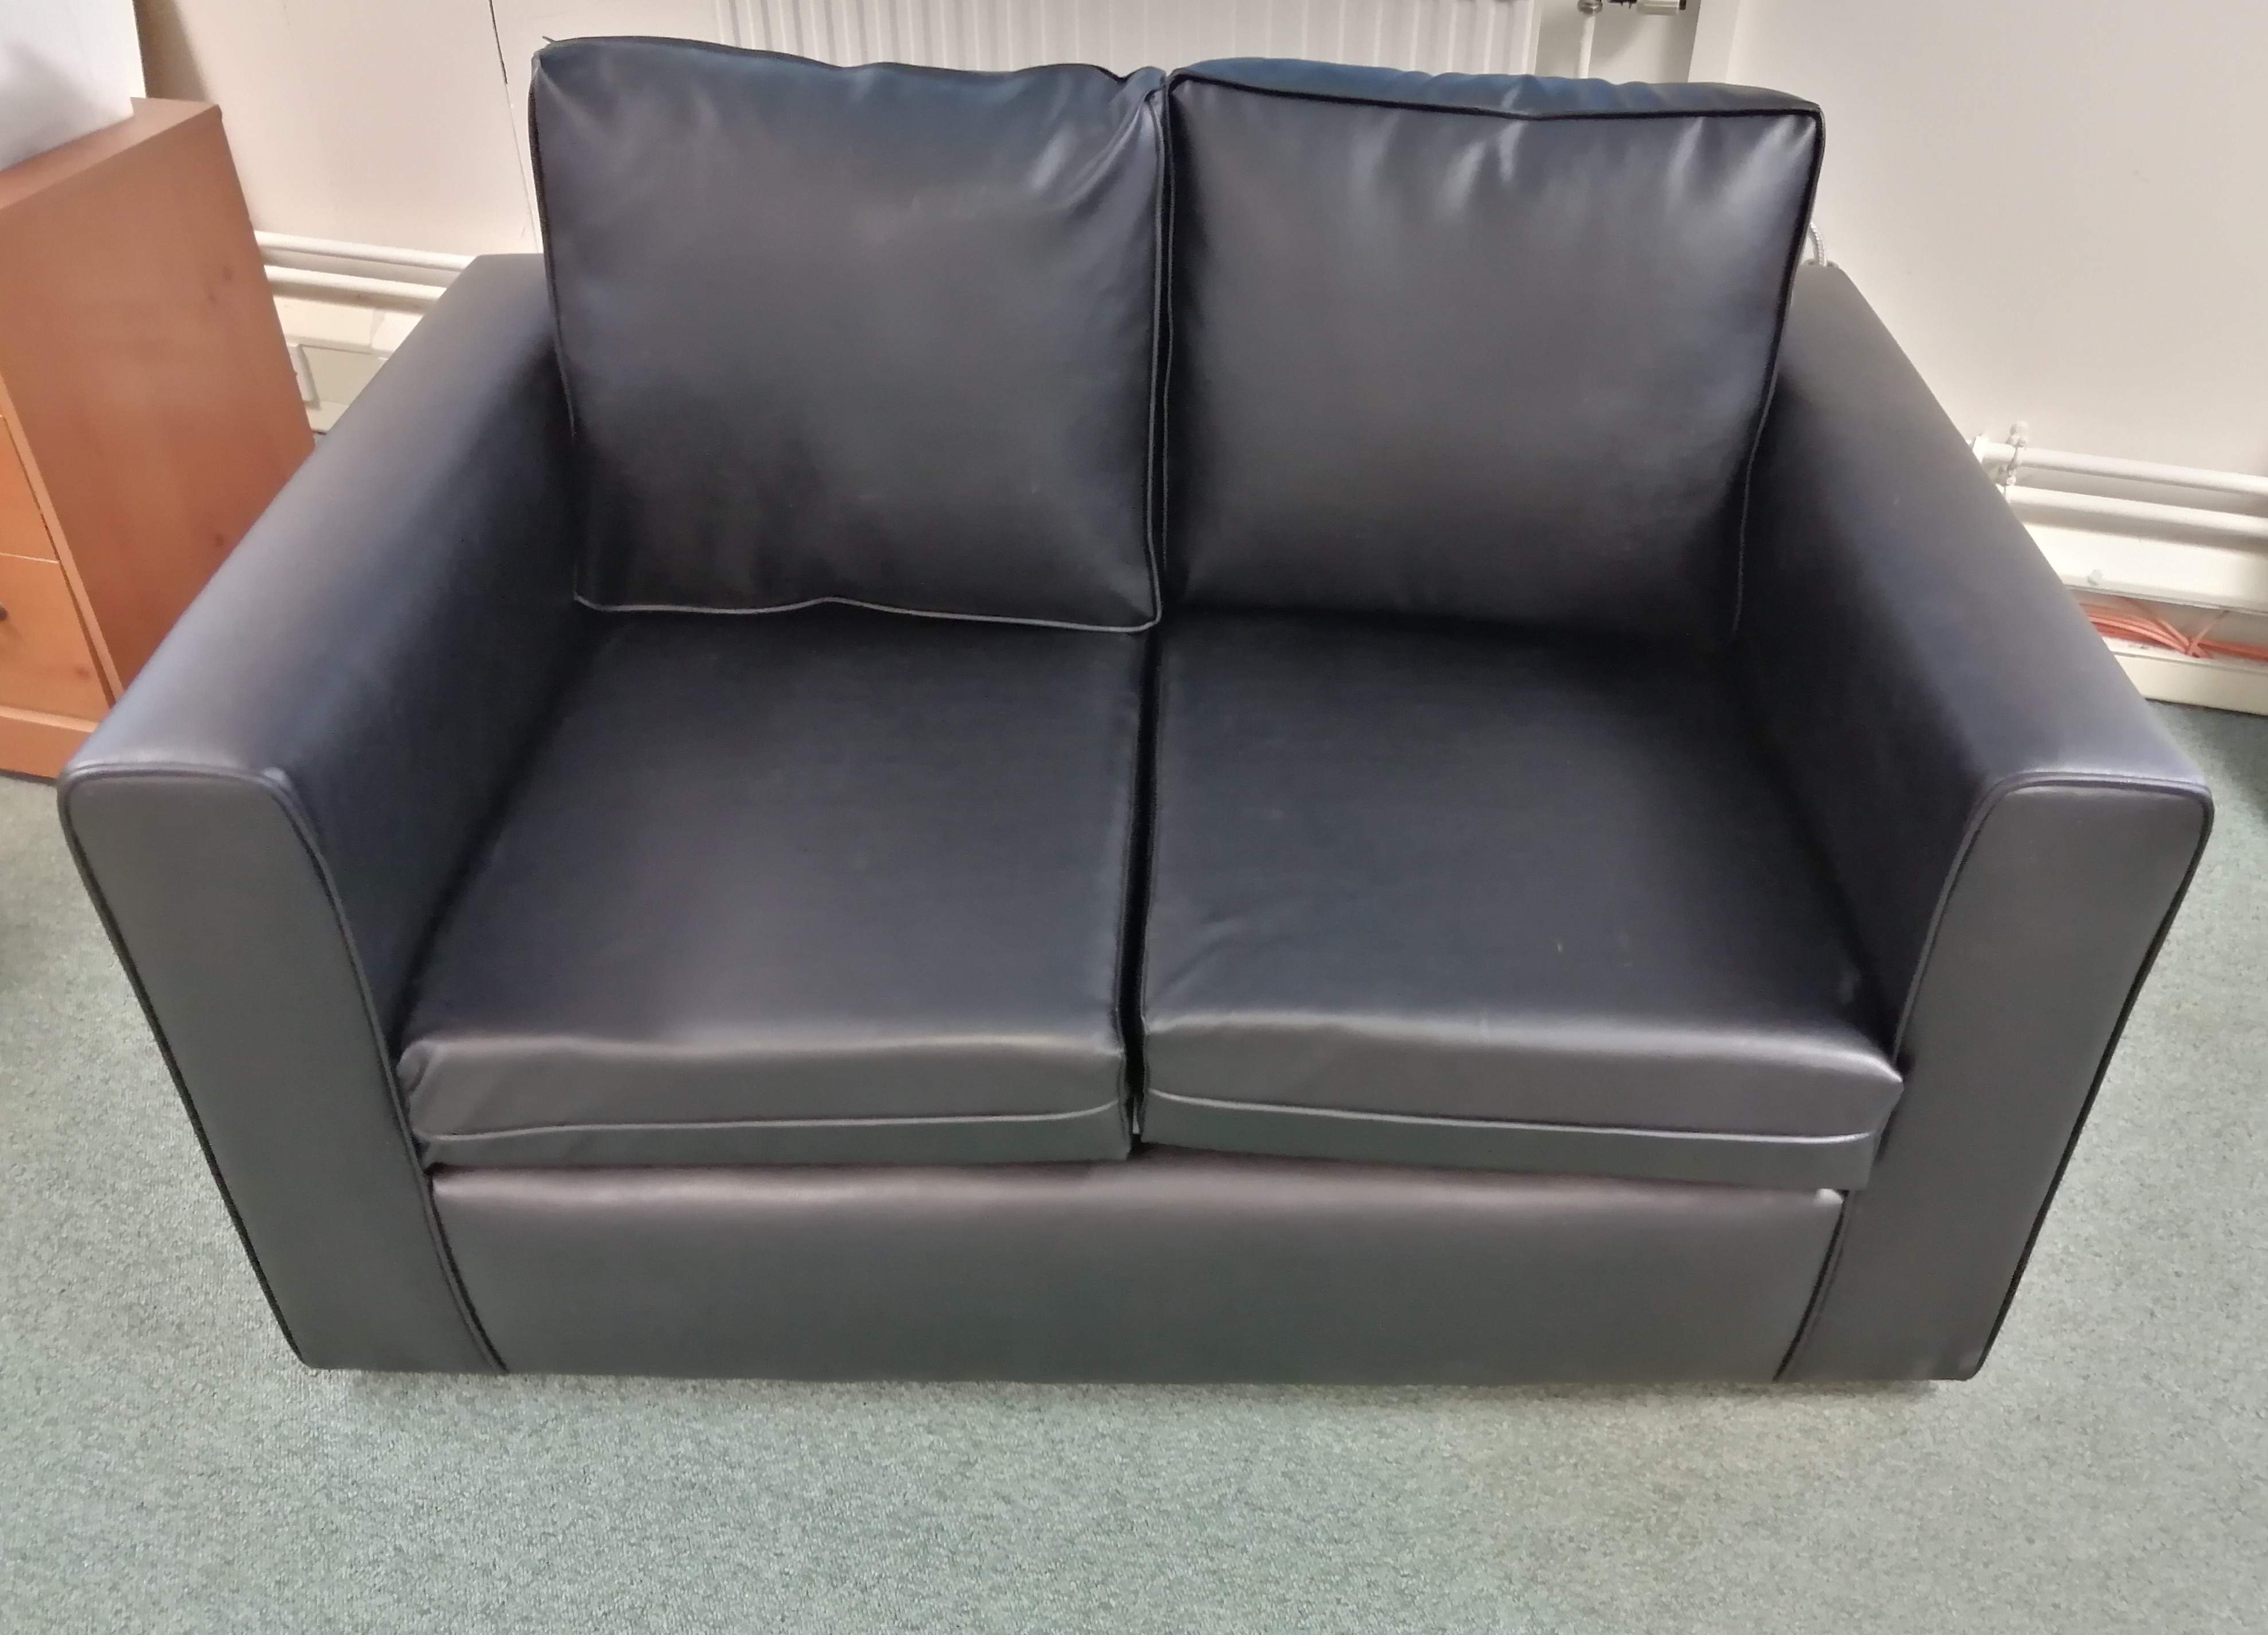 Brand New Black 2 seat Sofa